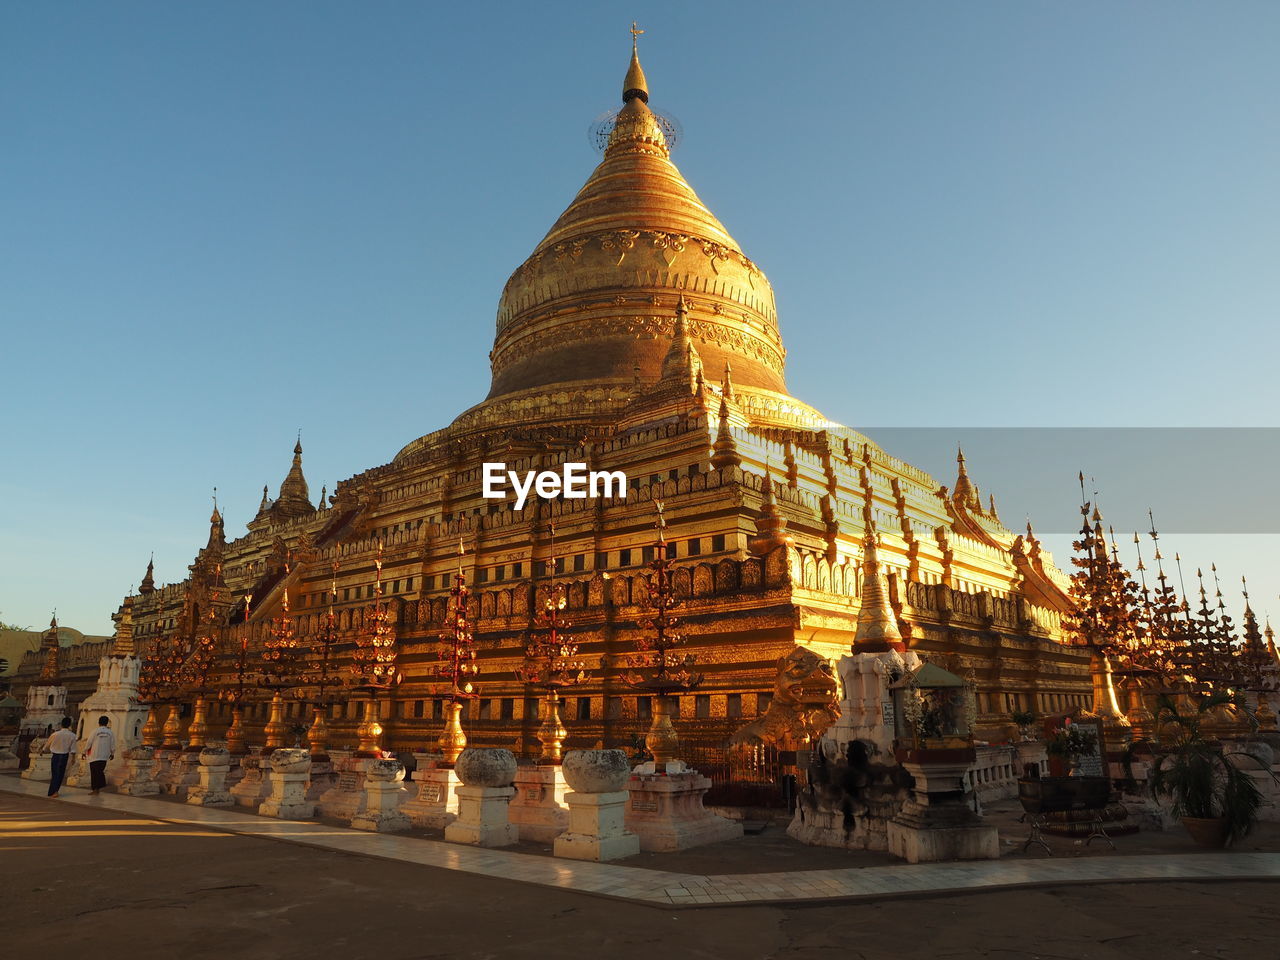 Golden shwezigon pagoda against sky